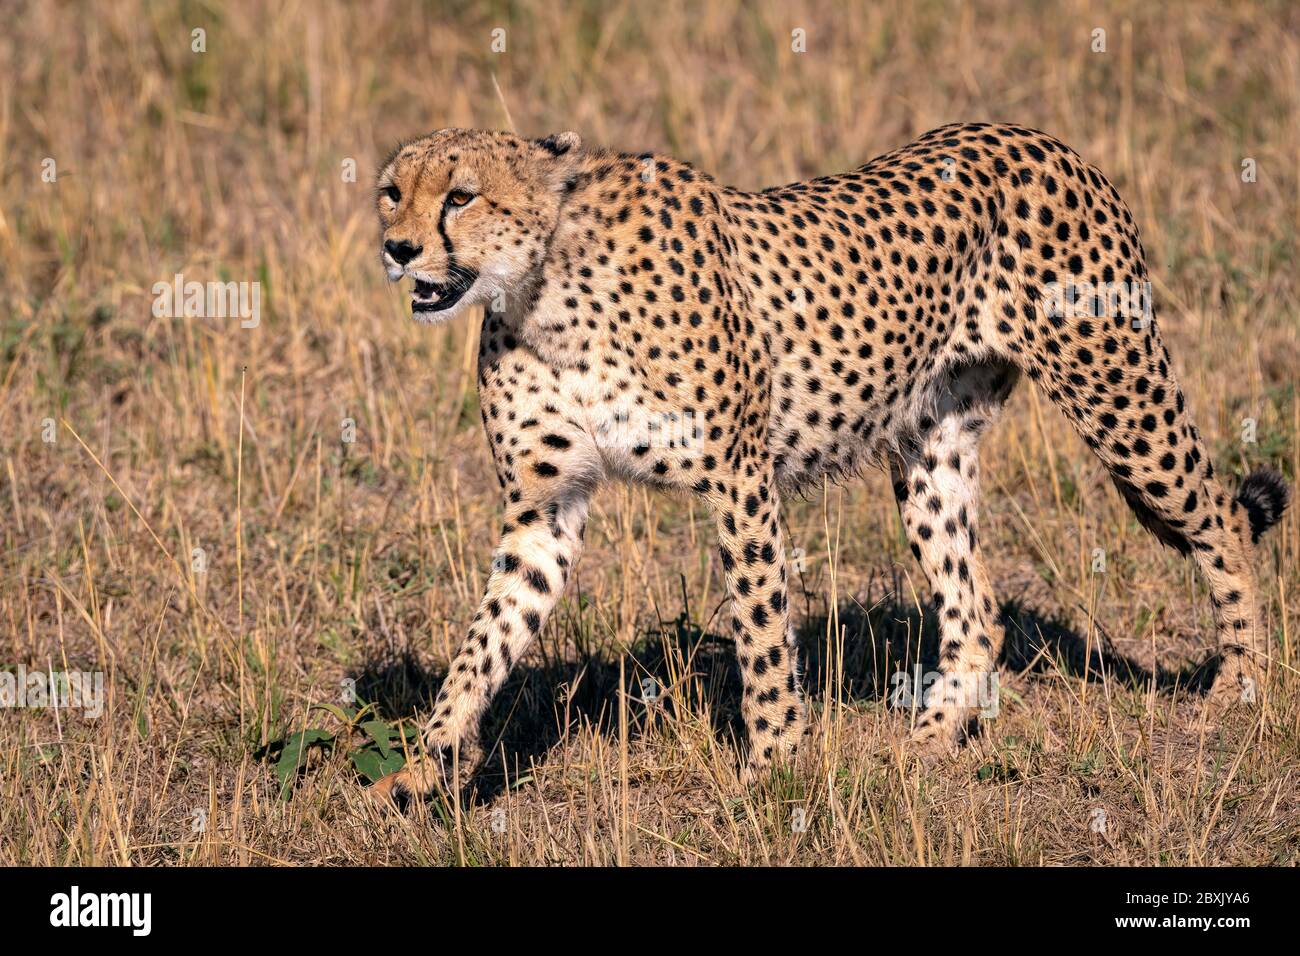 Close up of a young cheetah hunting in the tall grass. Image taken in the Maasai Mara, Kenya. Stock Photo